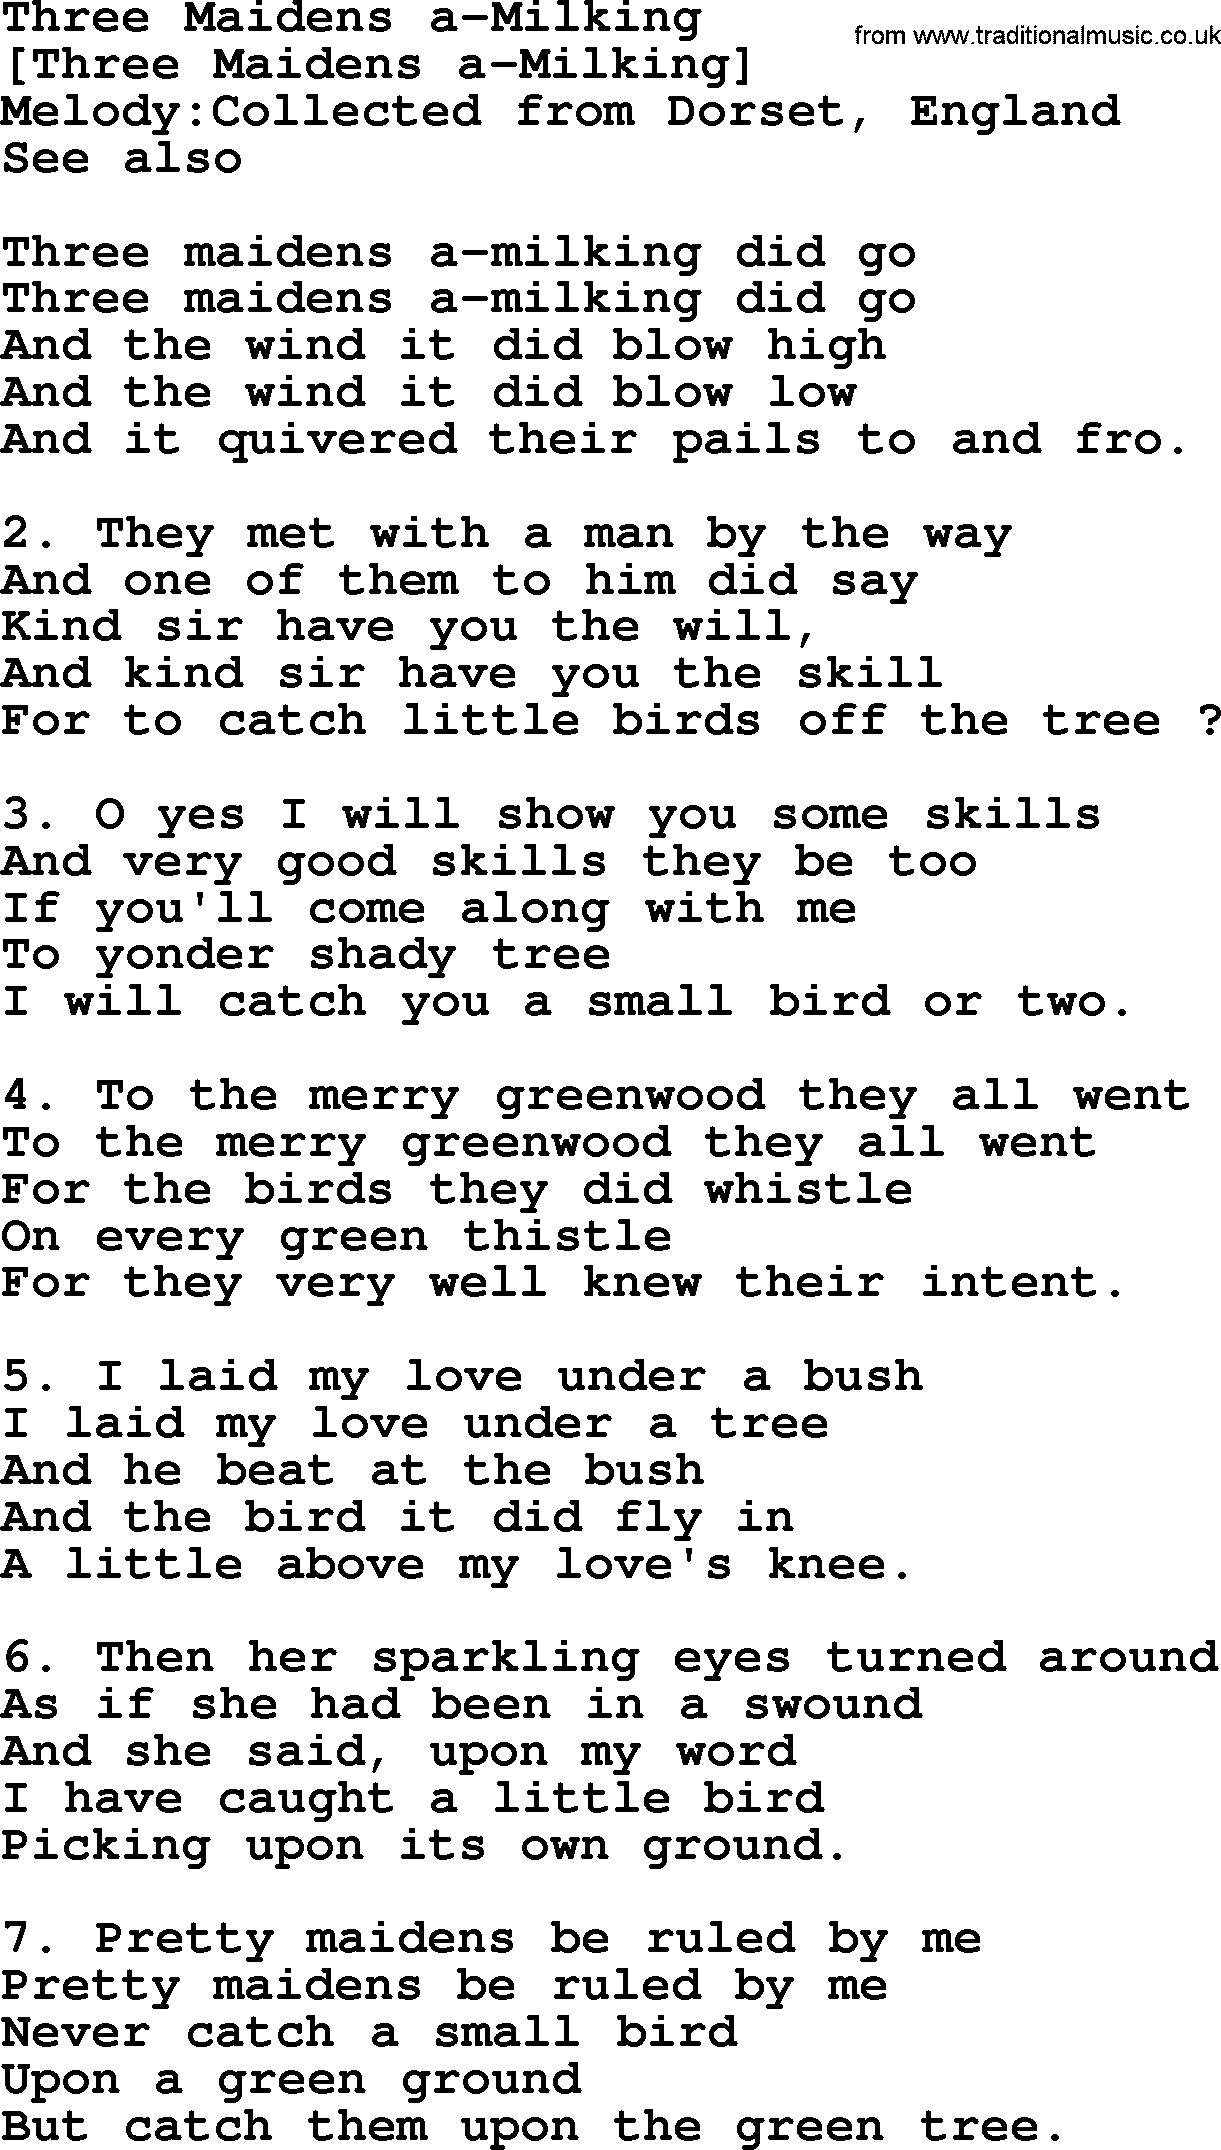 Old English Song: Three Maidens A-Milking lyrics